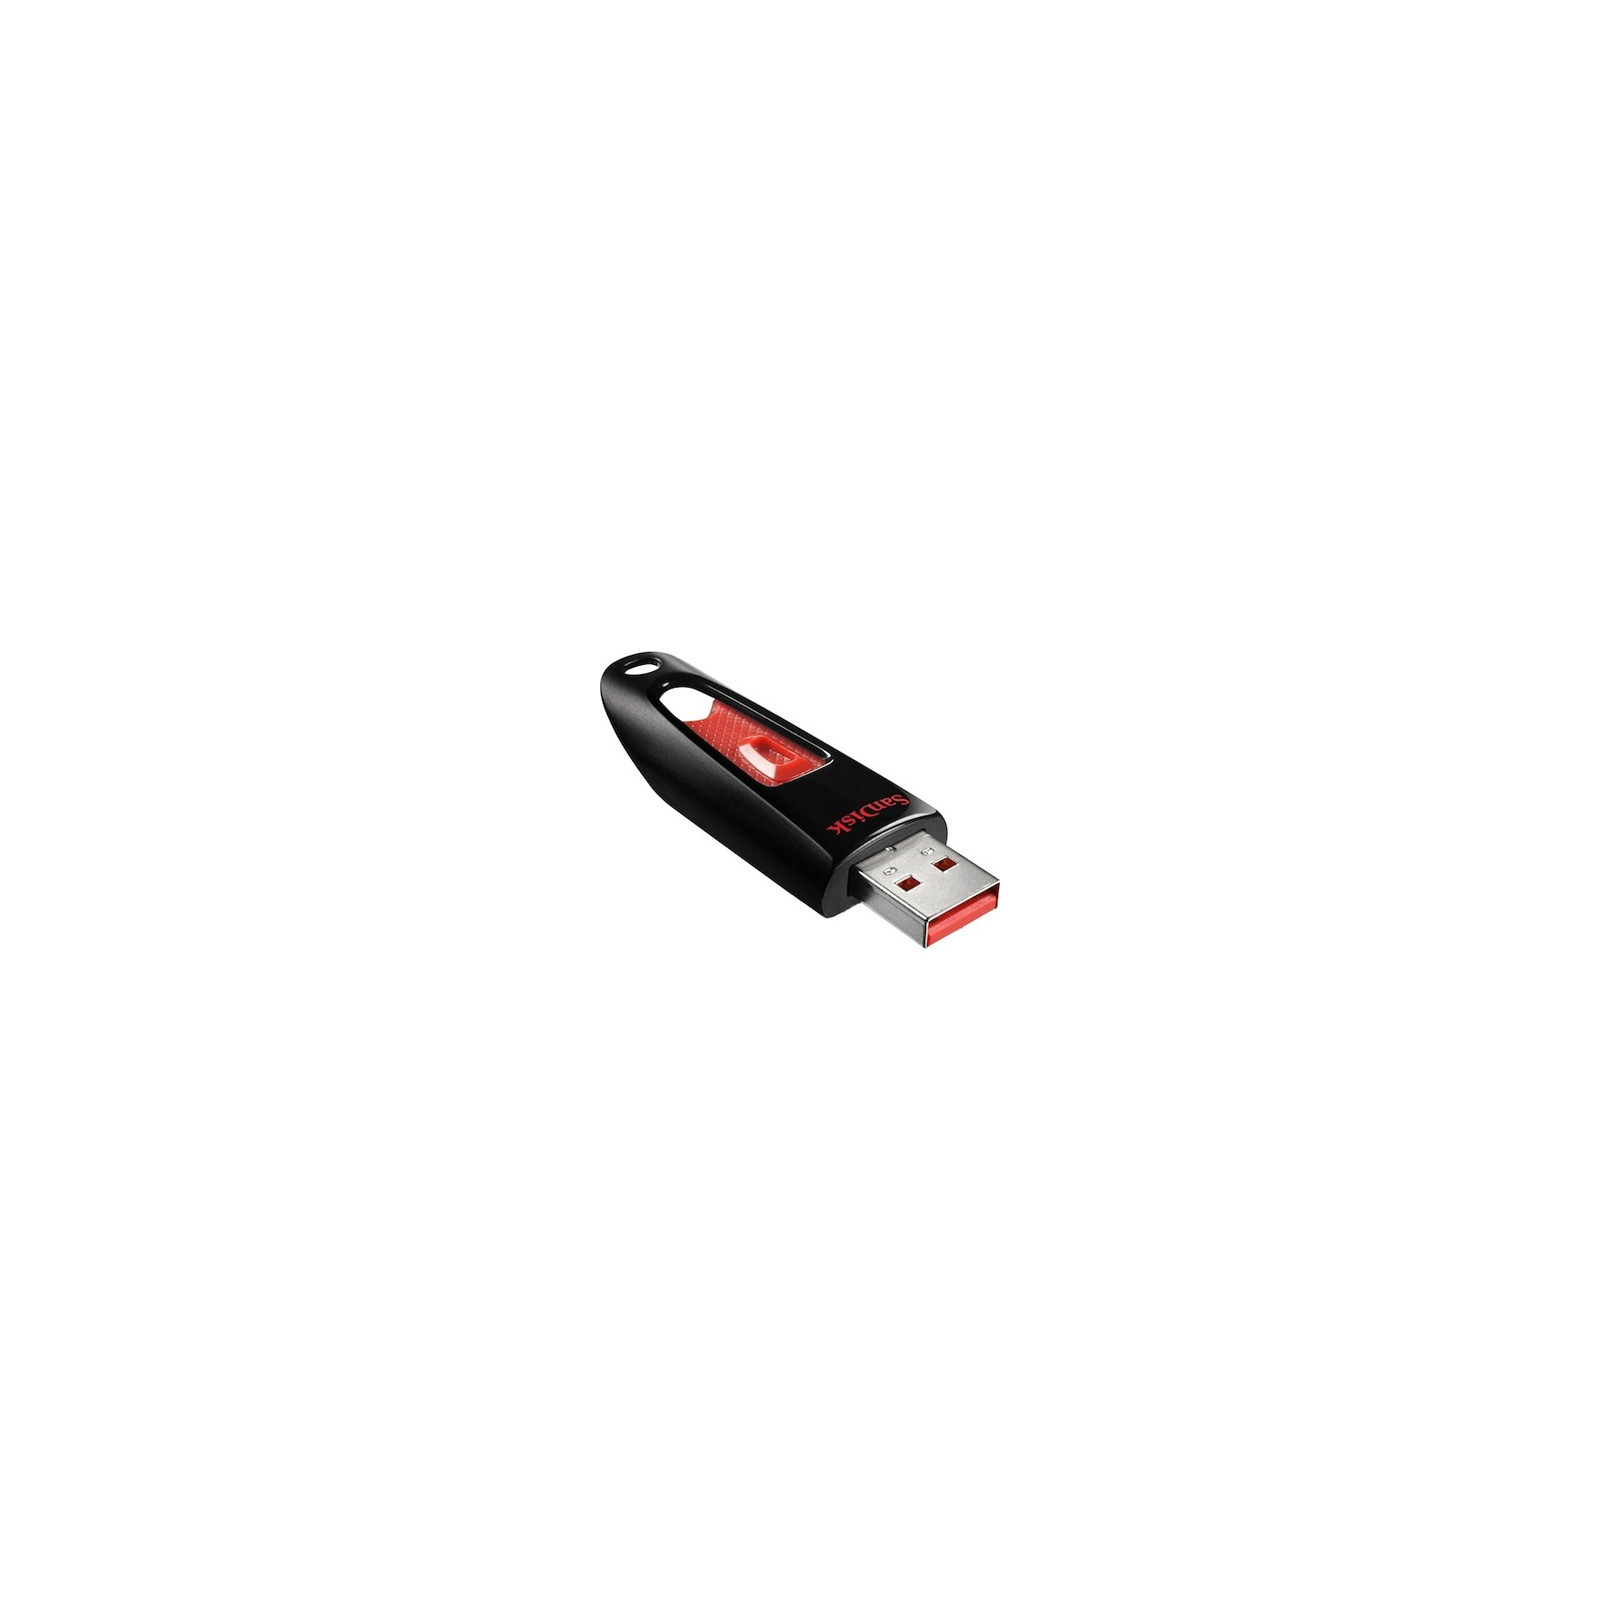 USB флеш накопитель SanDisk 64Gb Cruzer Ultra (SDCZ45-064G-U46) изображение 2